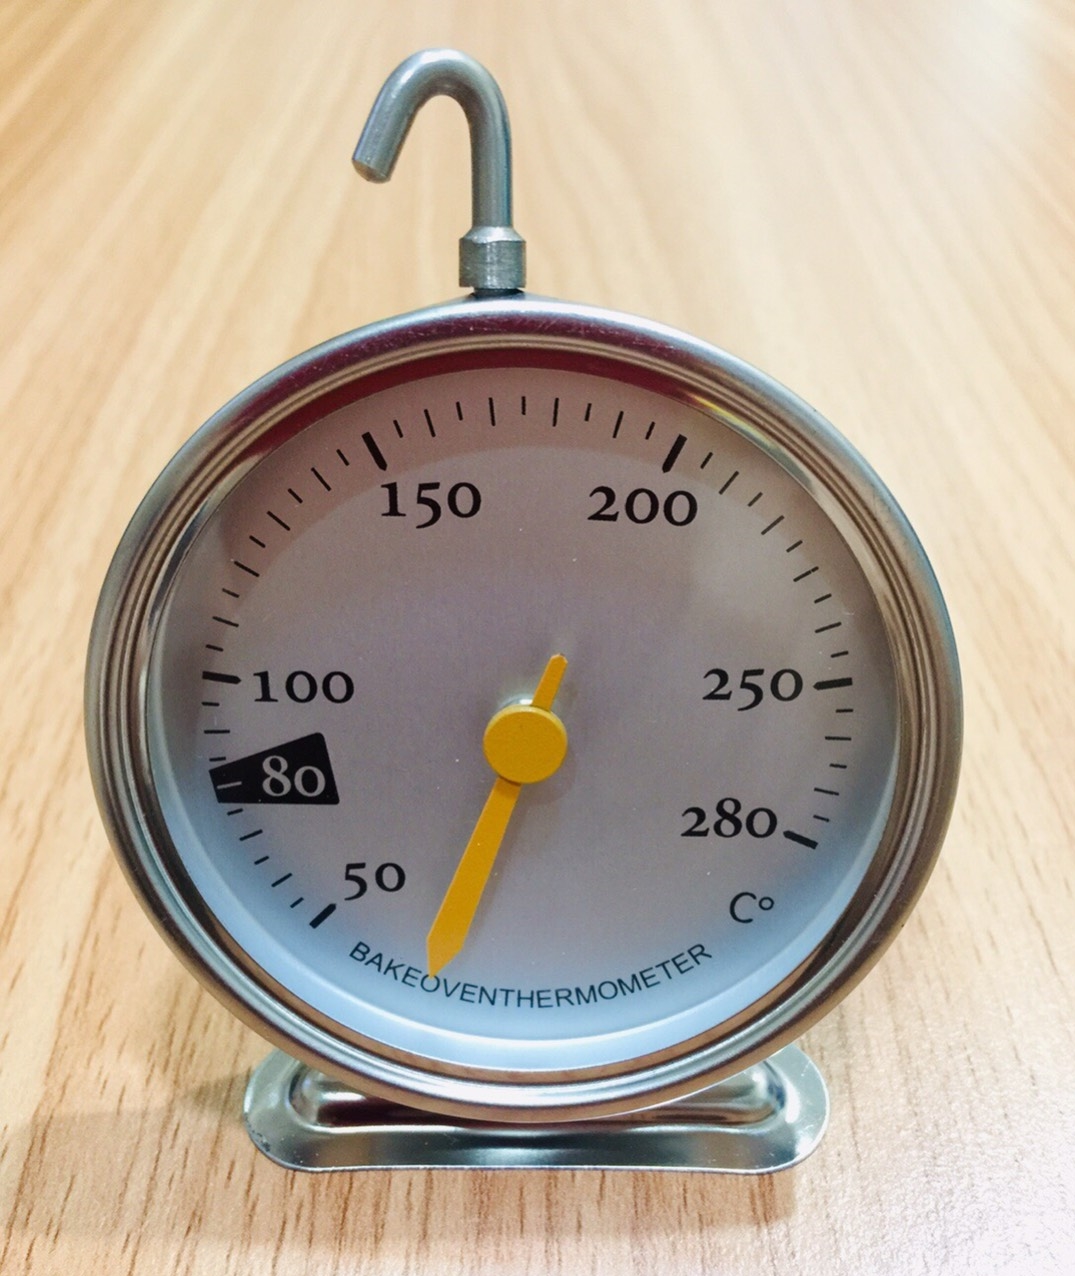 Bake Oven Thermometer เครื่องวัดอุณหภูมิ ที่วัดอุณหภูมิในเตาอบ หน้าปัดและตัวเลขใหญ่พิเศษ เทอร์โมมิเตอร์ อุปกรณ์ทำขนม ใช้ในการวัดอุณหภูมิเตาอบ ช่วงการวัด 50-280 องศาเซลเซียส